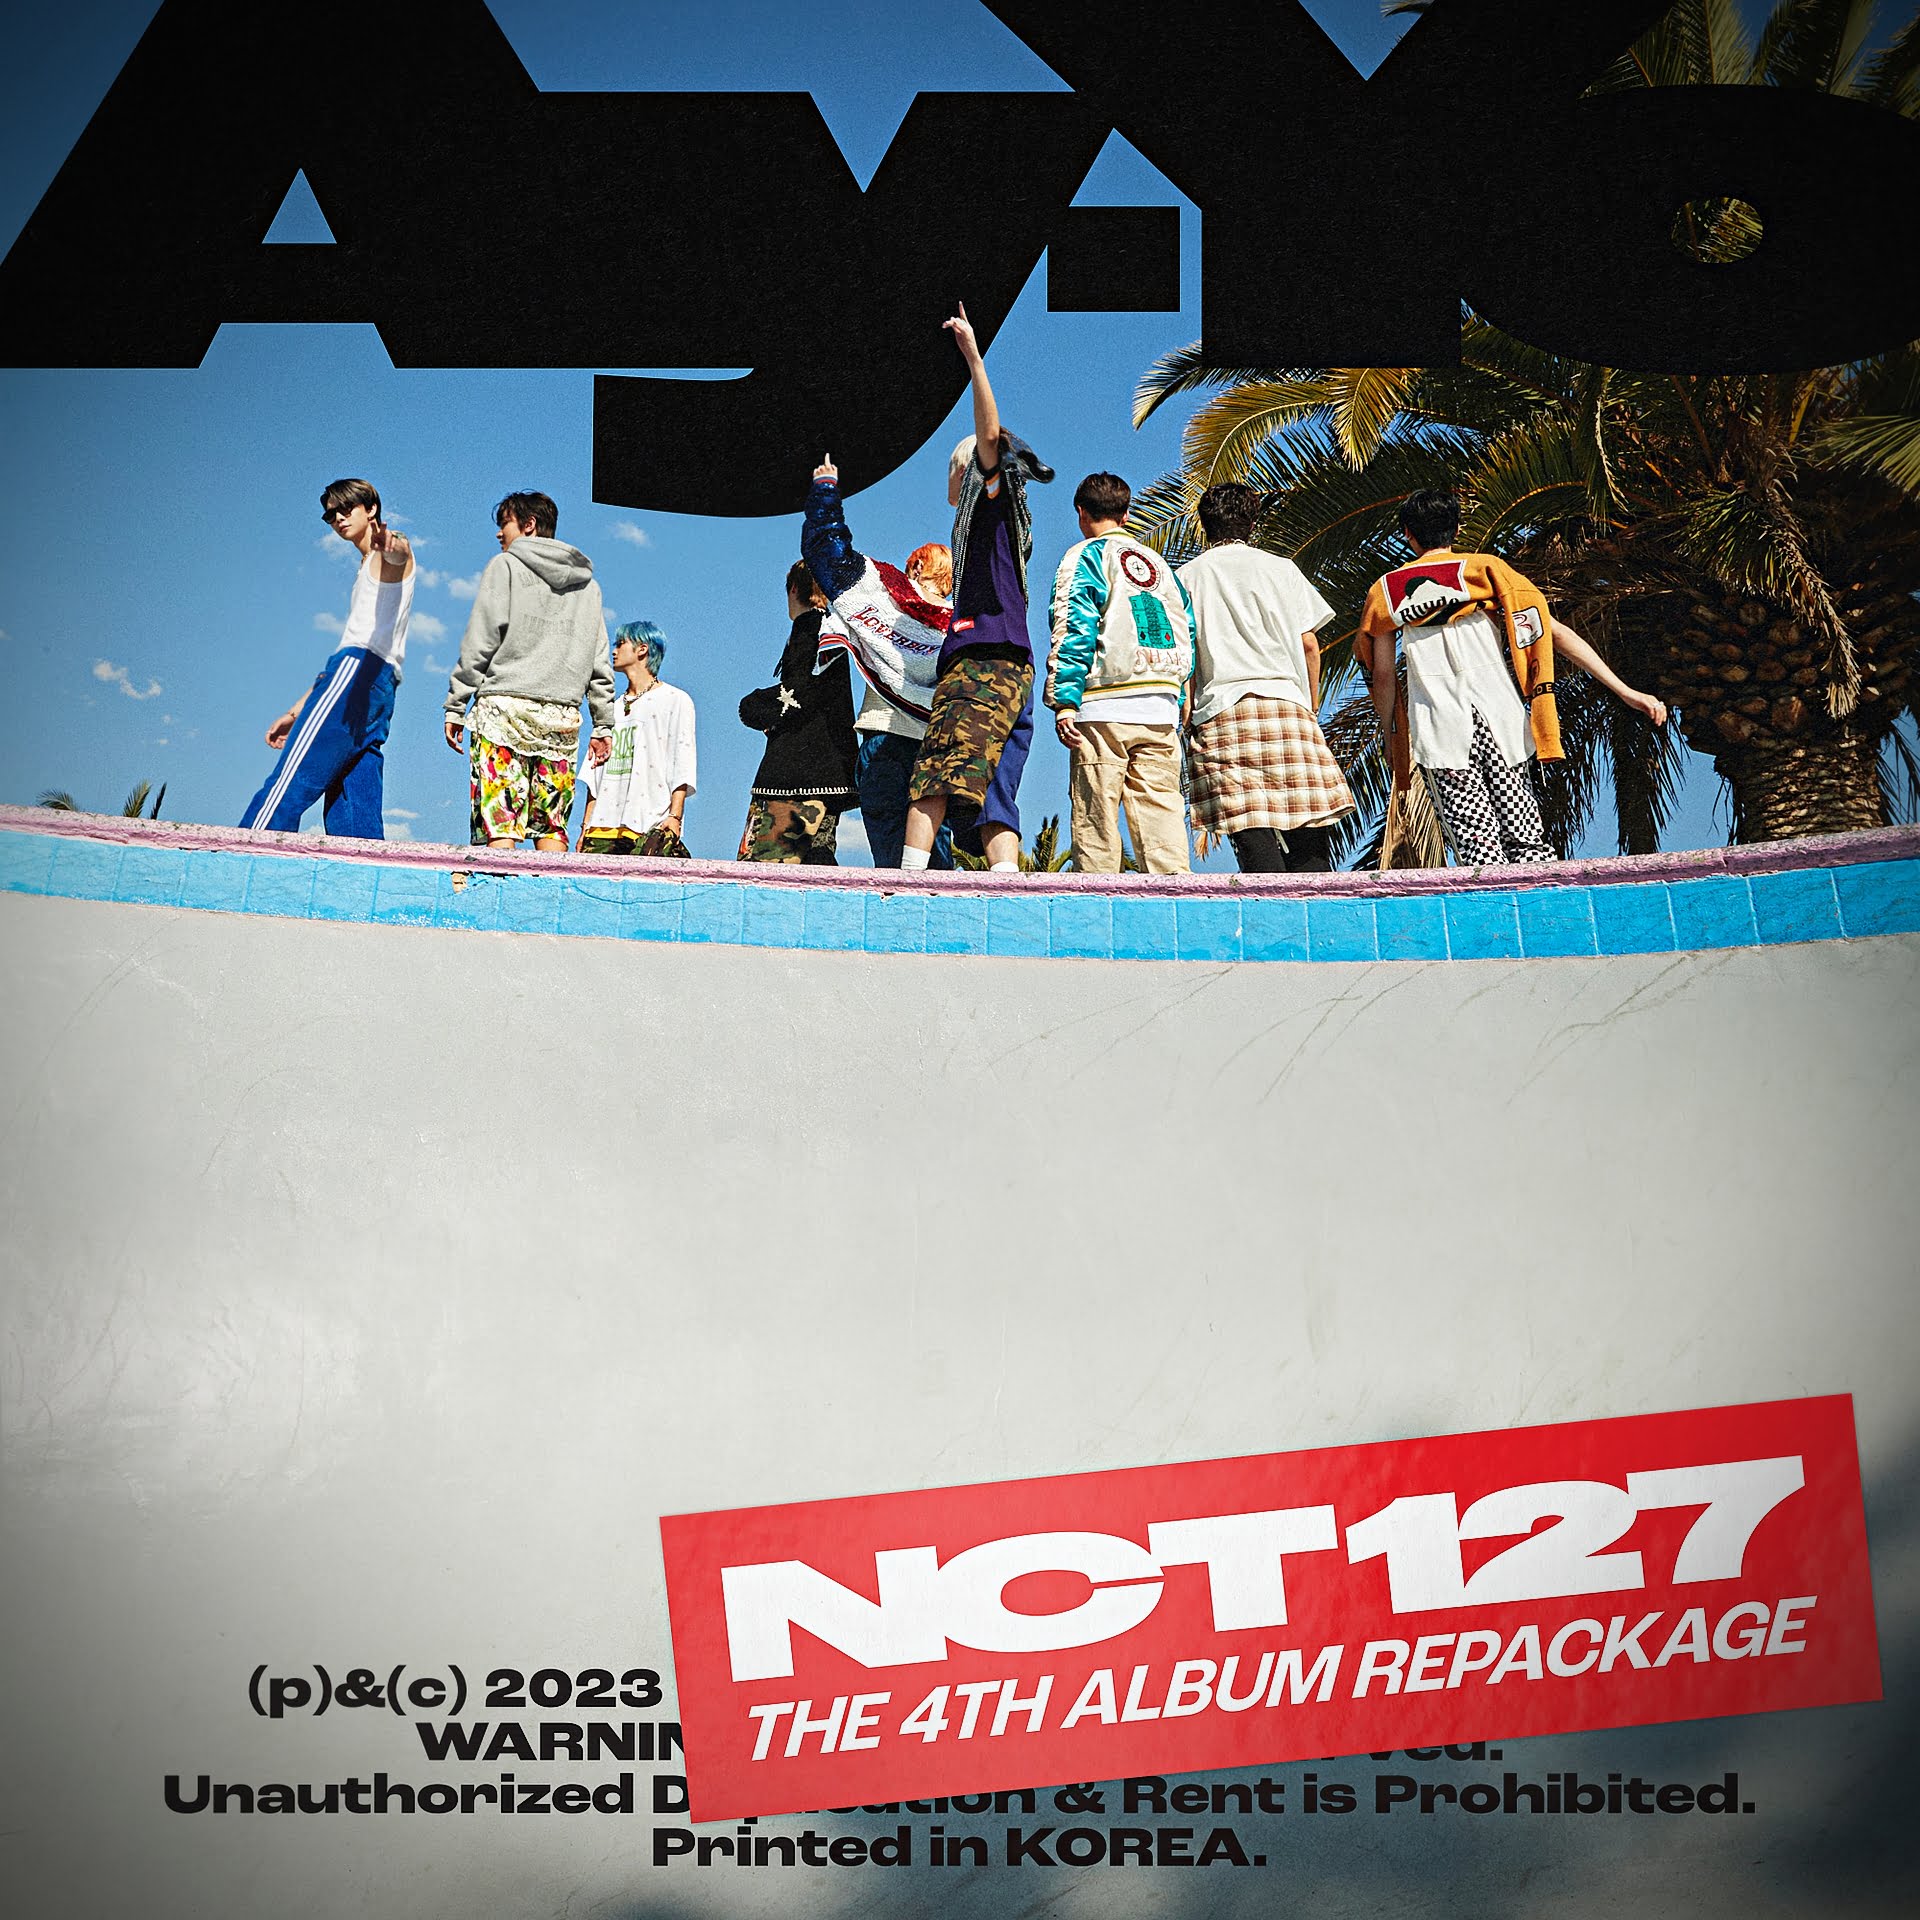 Nct 127 releases ay-yo via 360 magazine.